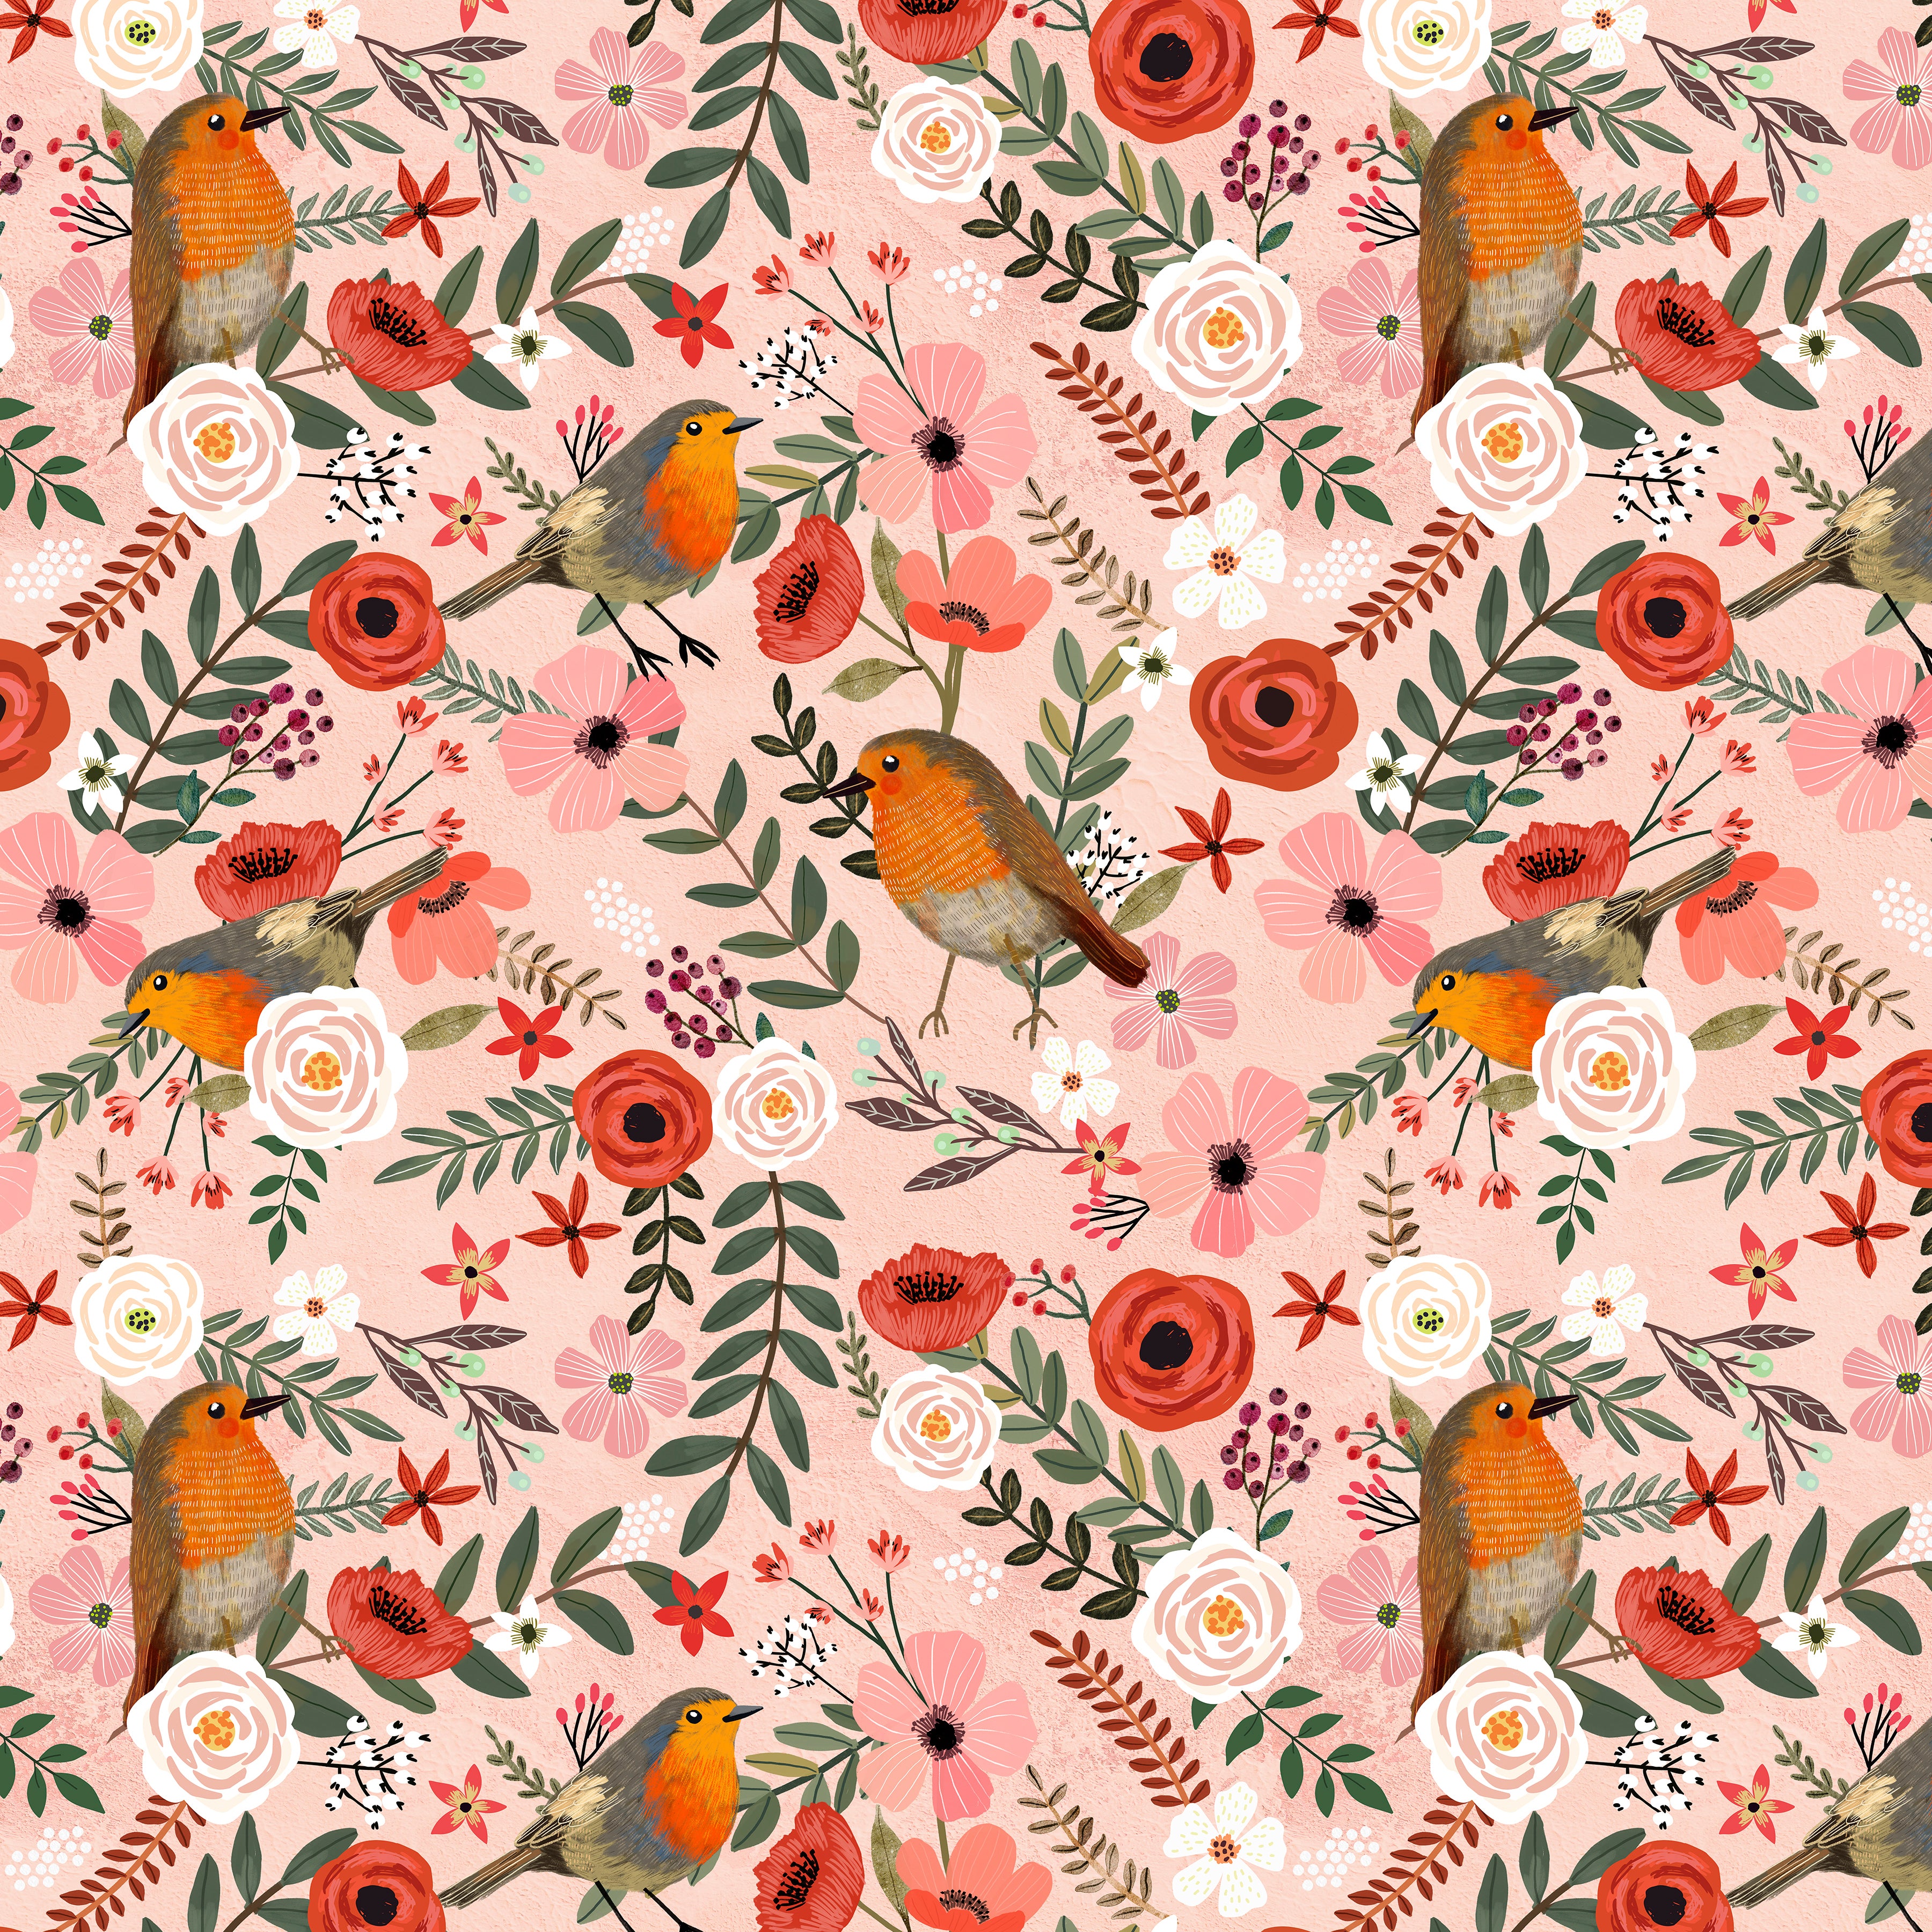 Bird Garden - Lovely Robins Pink by Mia Charro for Free Spirit